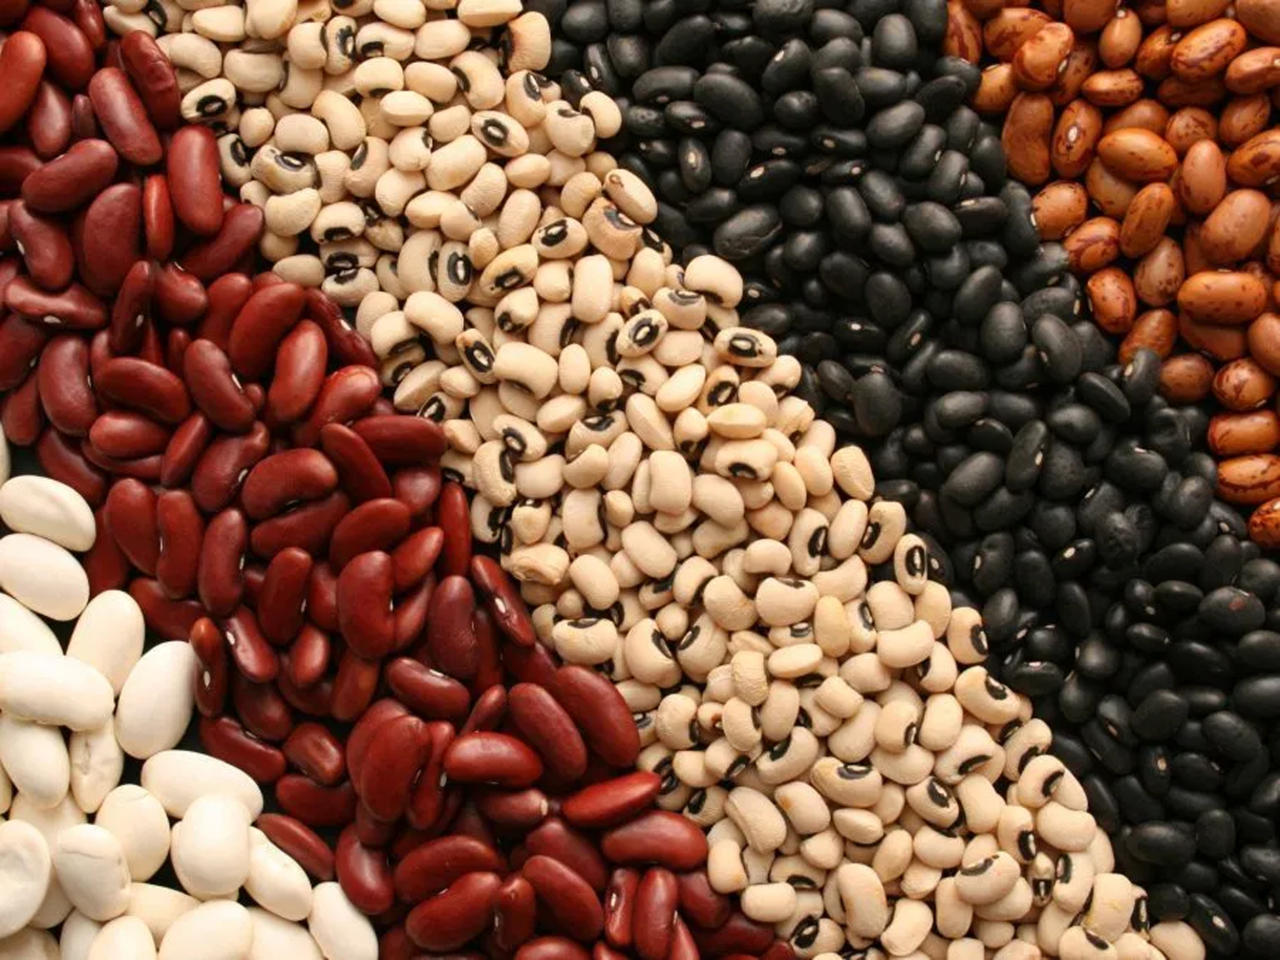 Turkey's export of grains, legumes to Georgia surges in value